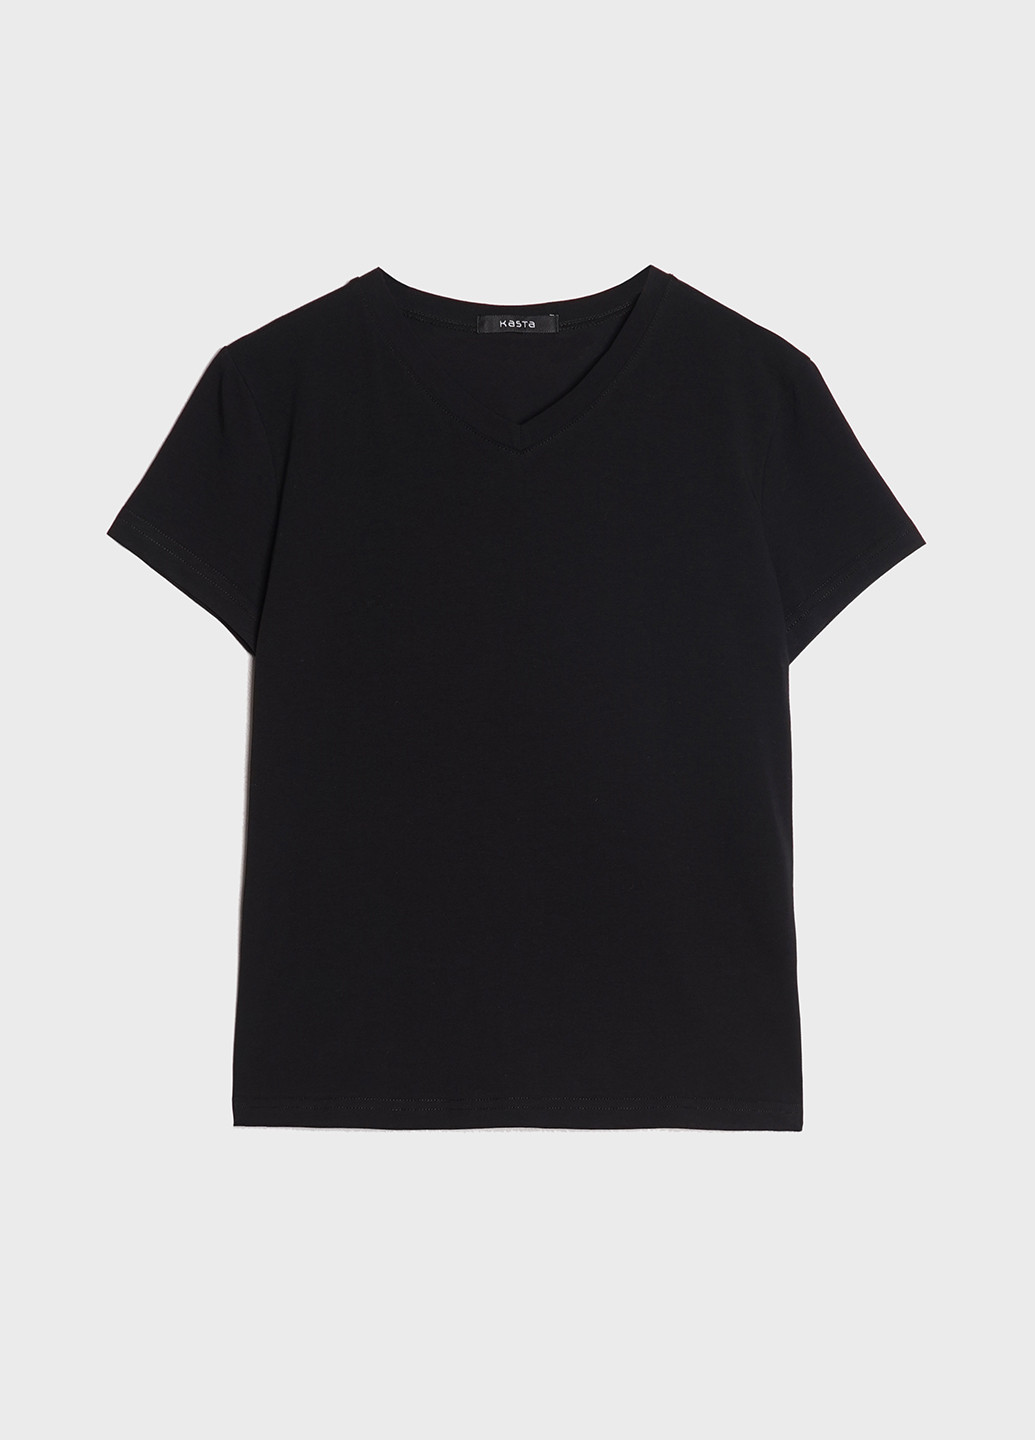 Чорна всесезон футболка жіноча напівприлегла KASTA design